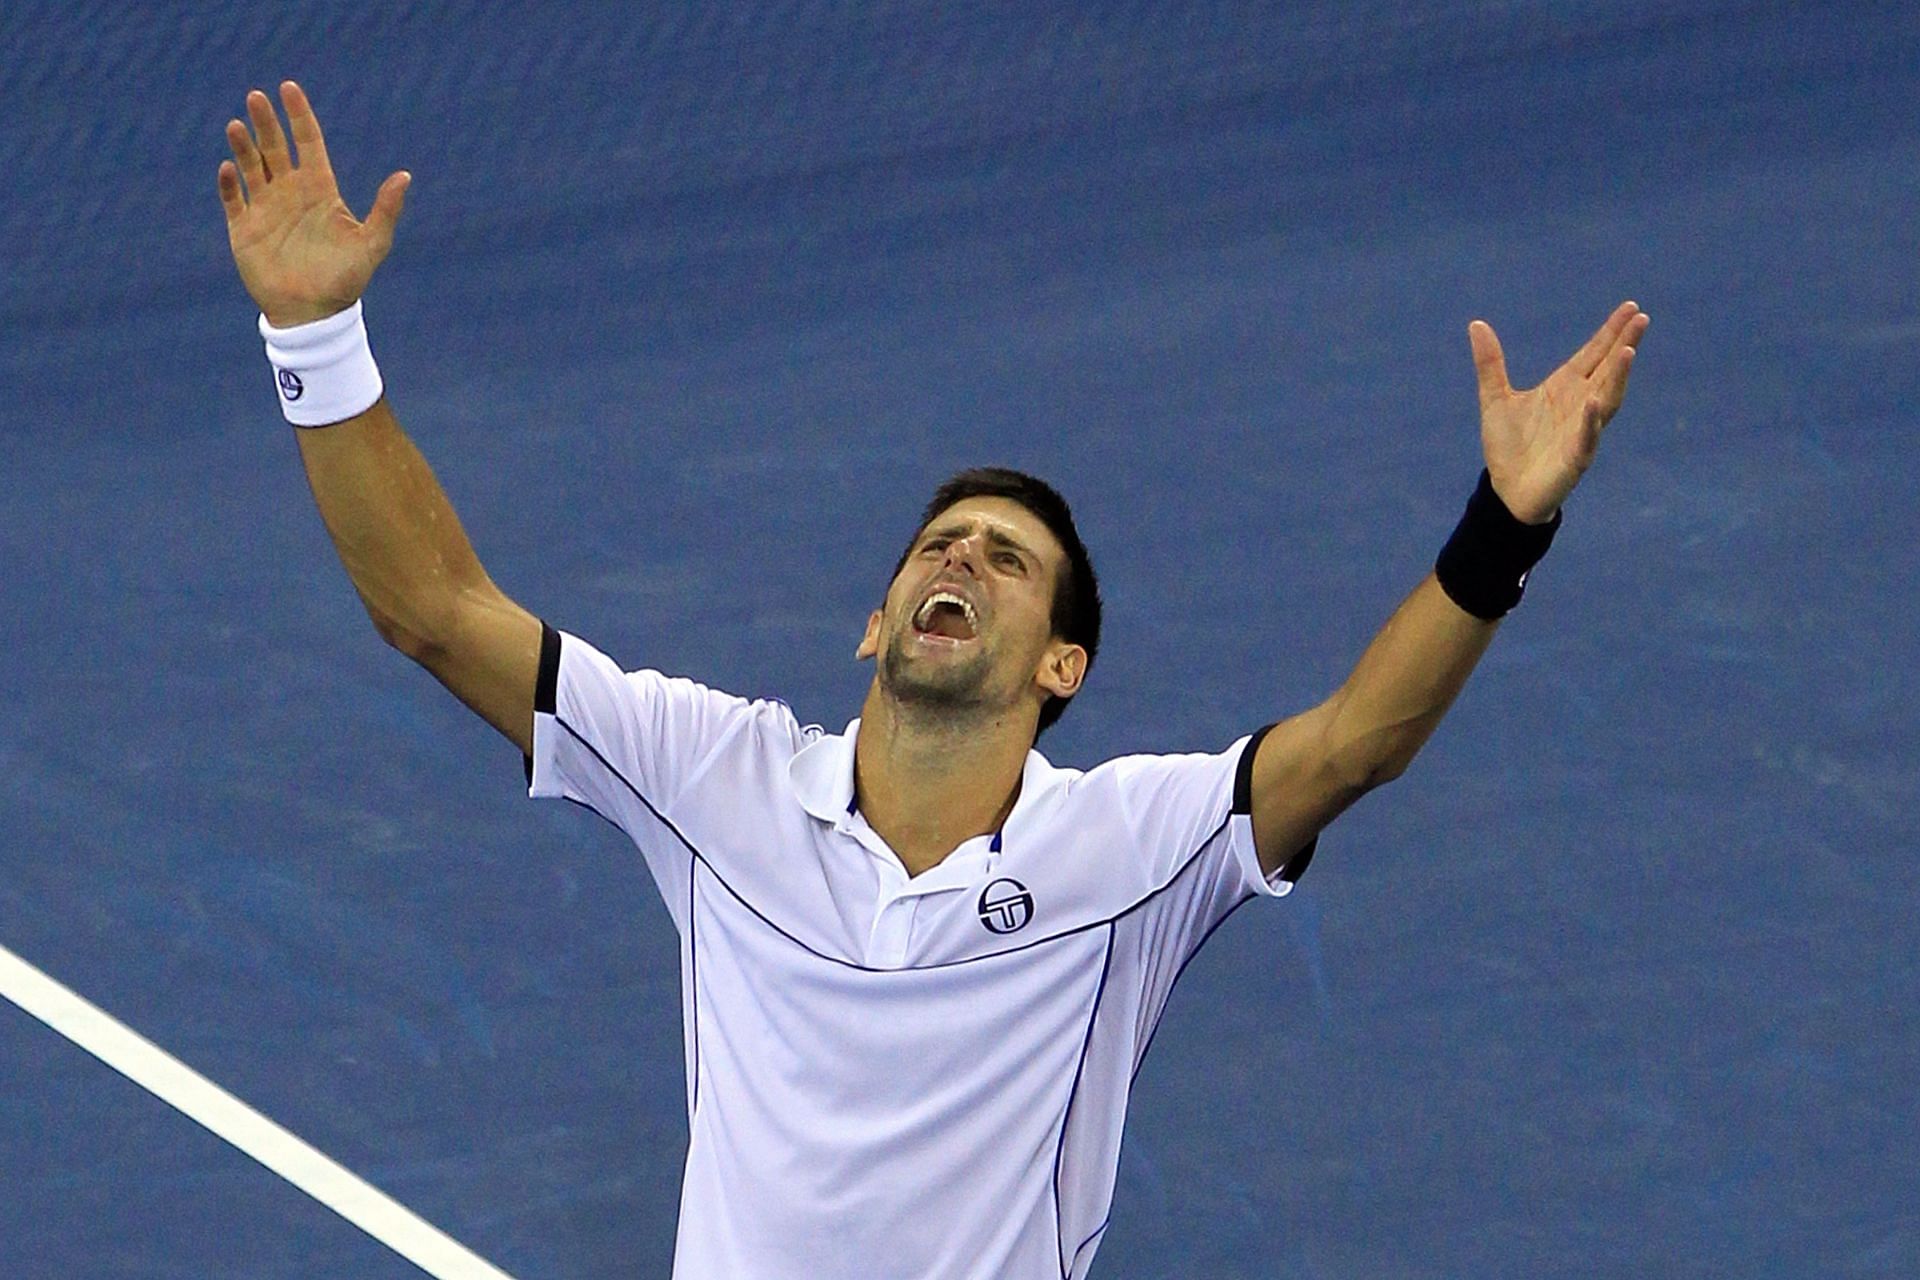 Novak Djokovic won his maiden US Open title in 2011